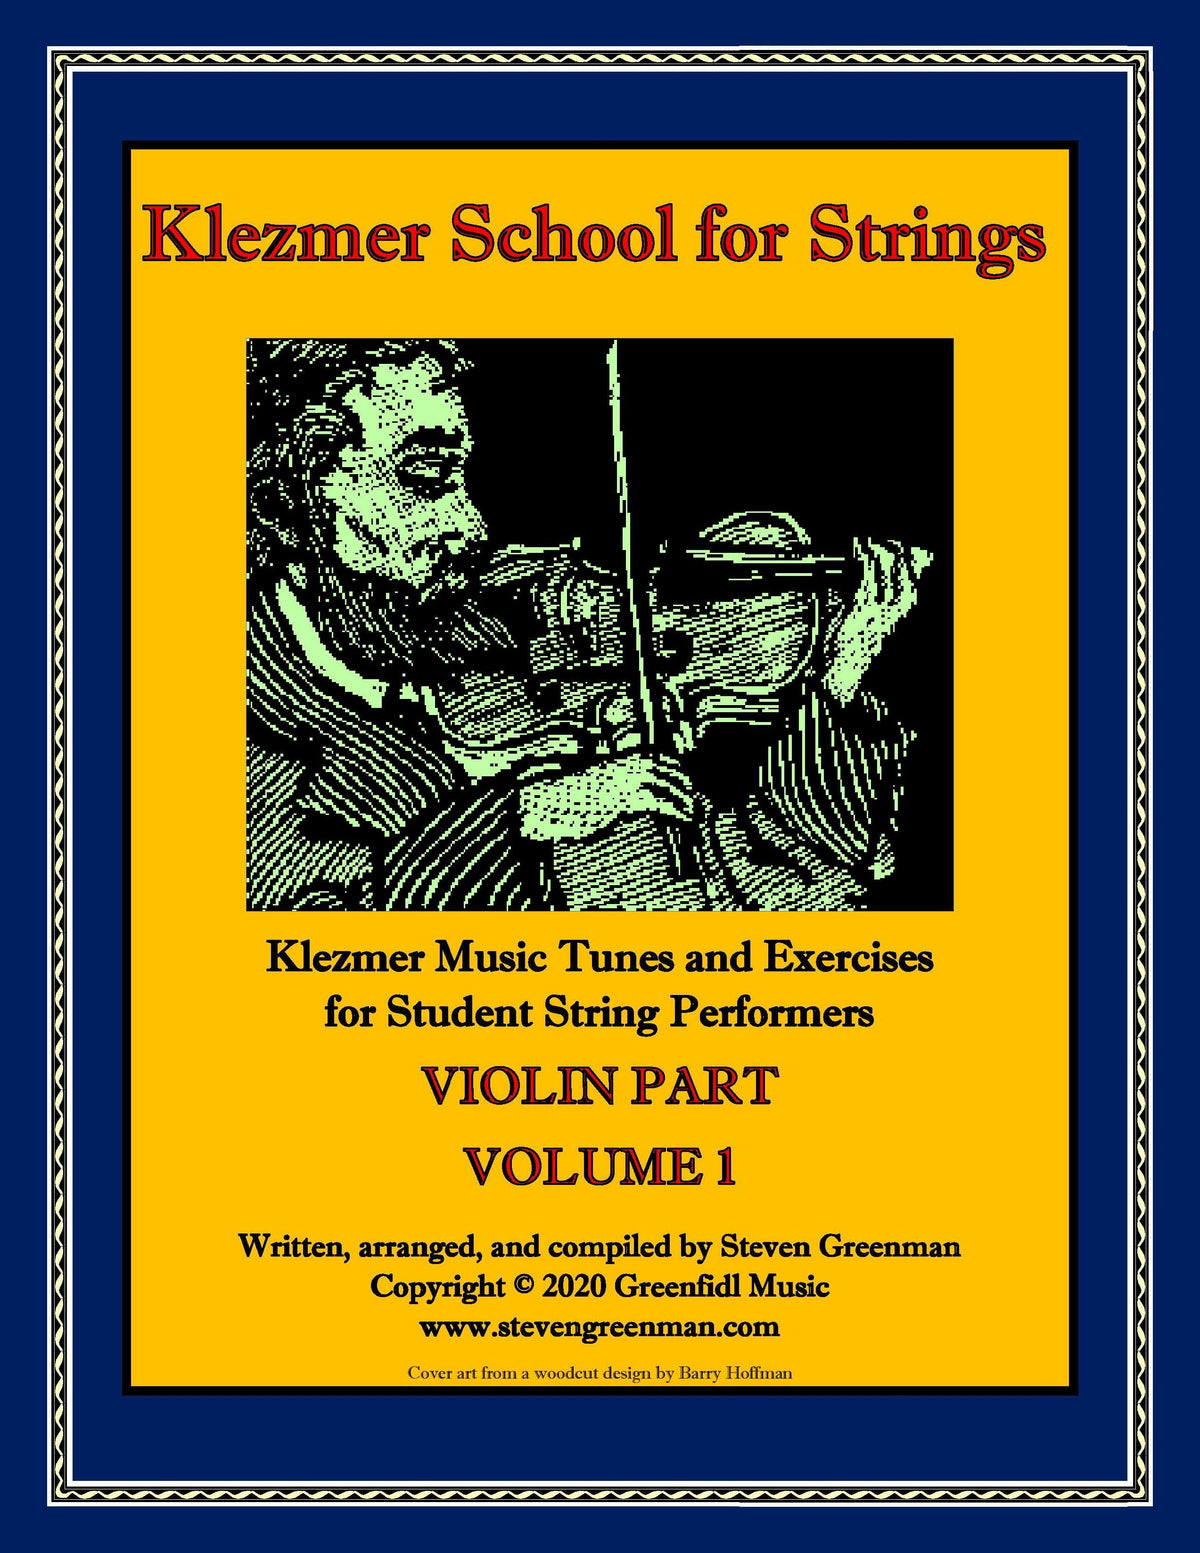 Greenman, Steven - Klezmer School for Strings Volume 1 - Violin Music